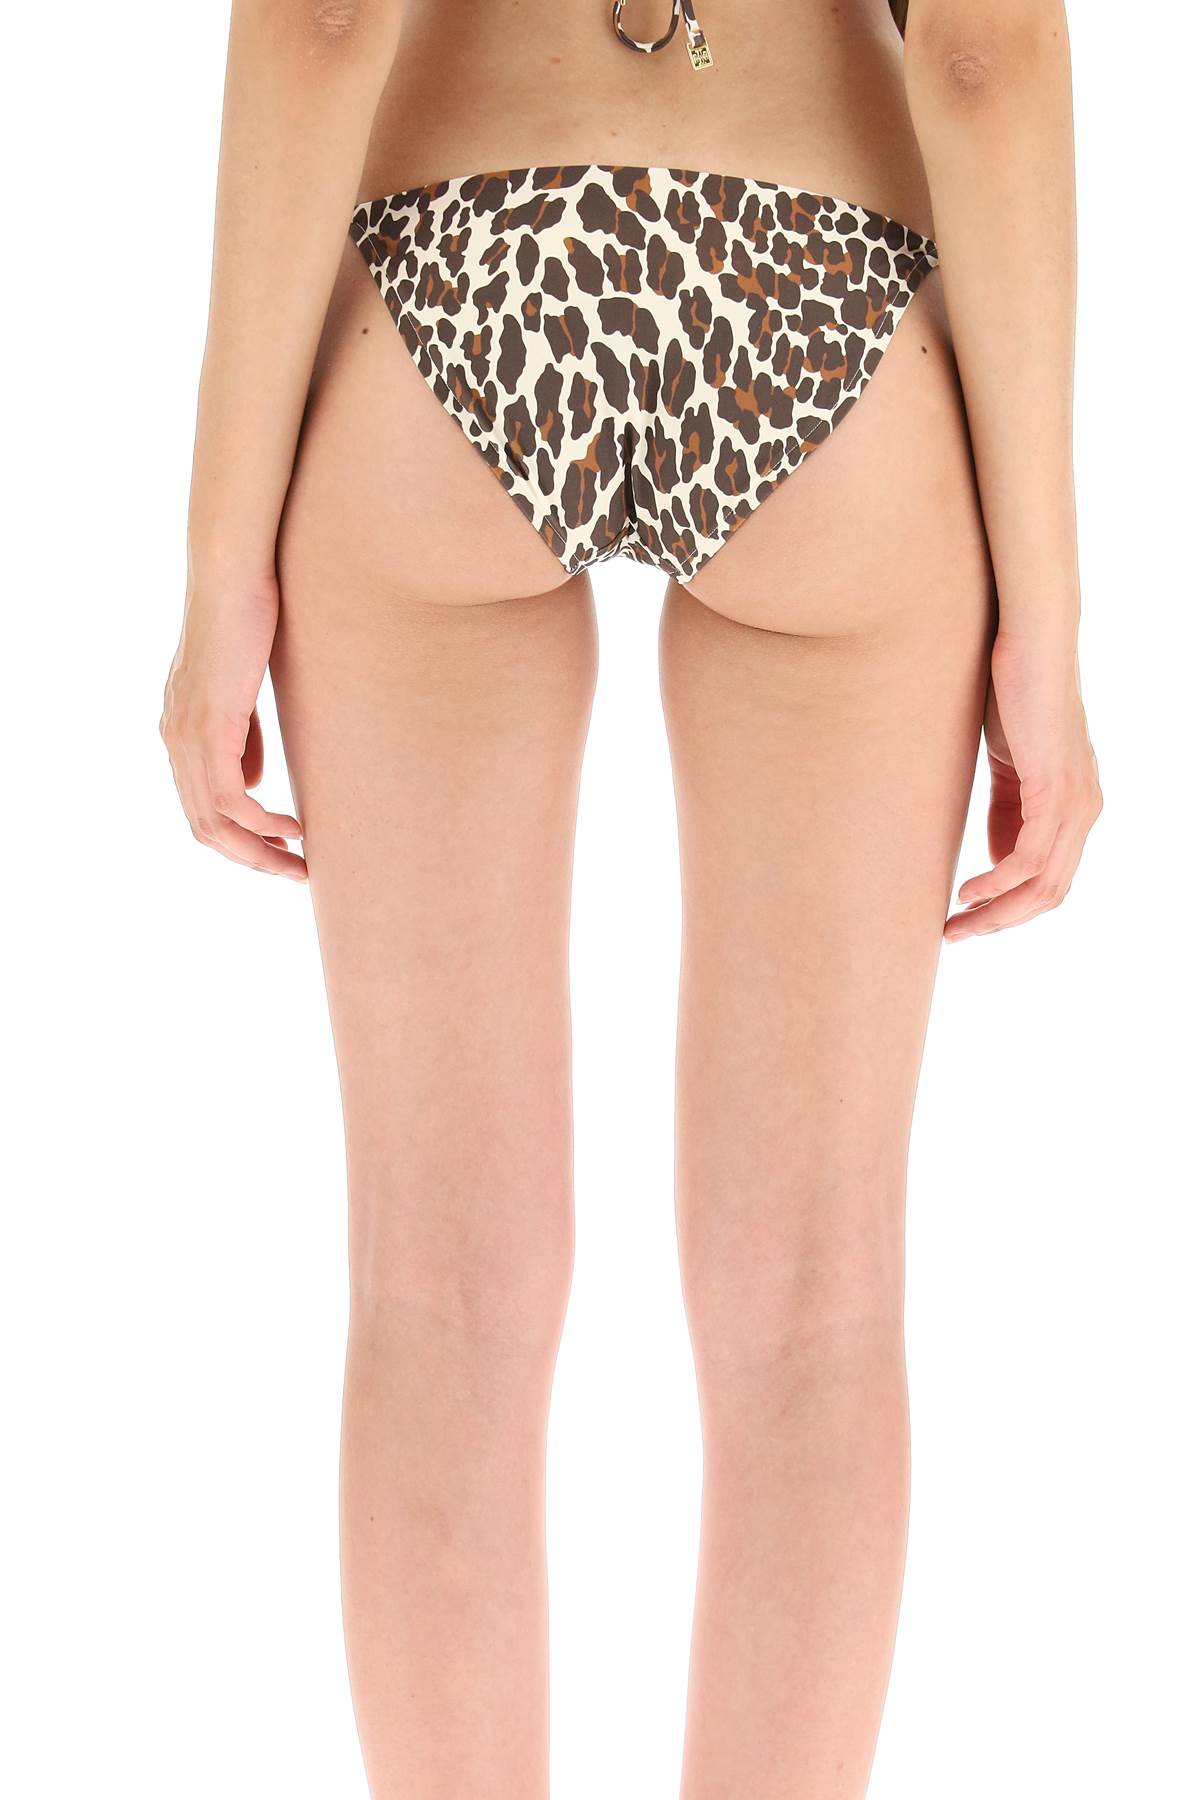 Tory burch leopard print bikini bottom-2